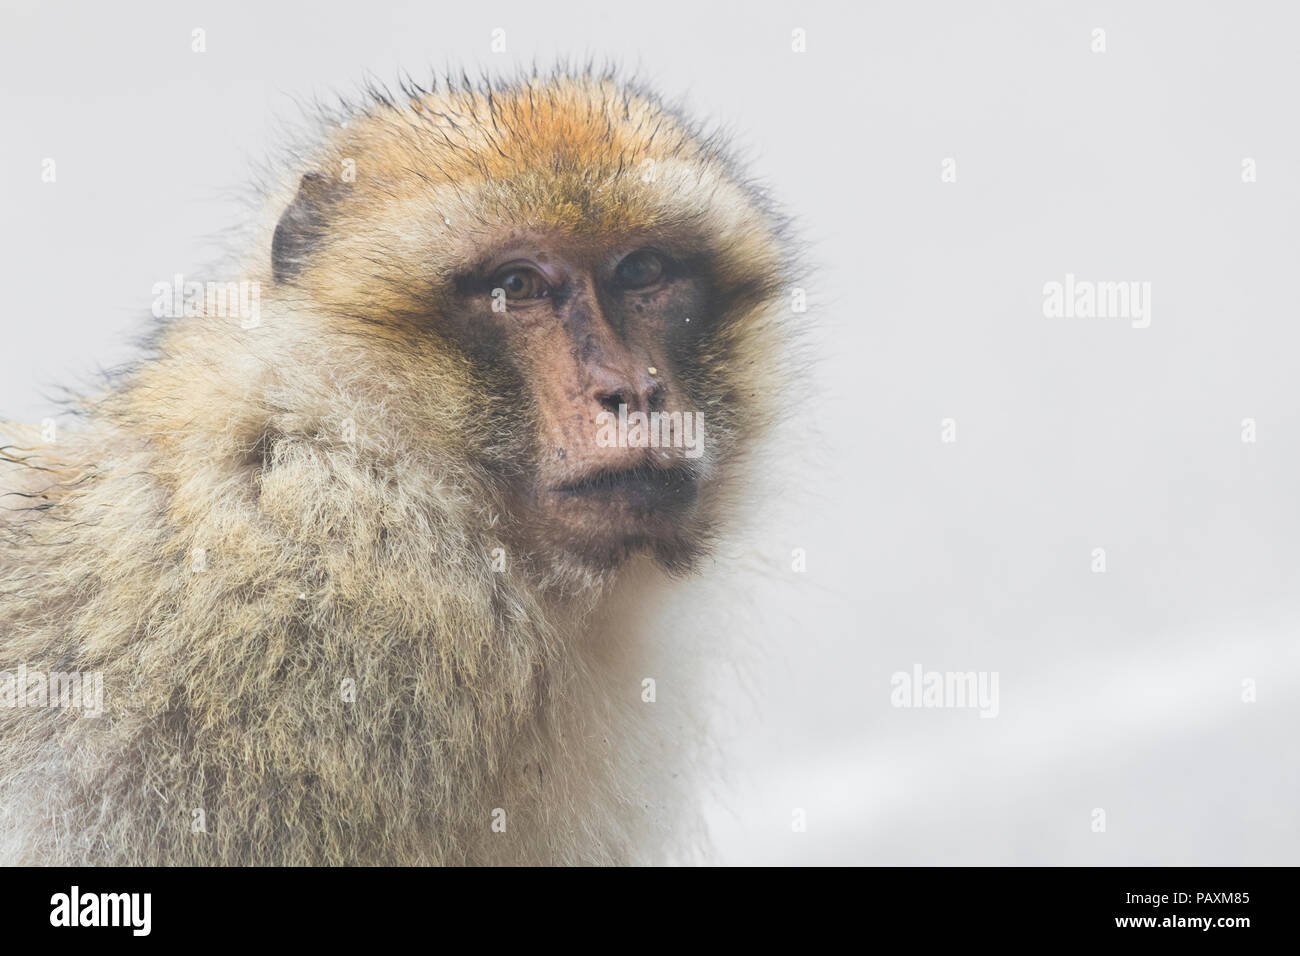 Macaque de Barbarie (Macaca sylvanus), portrait d'individu dans le brouillard Banque D'Images